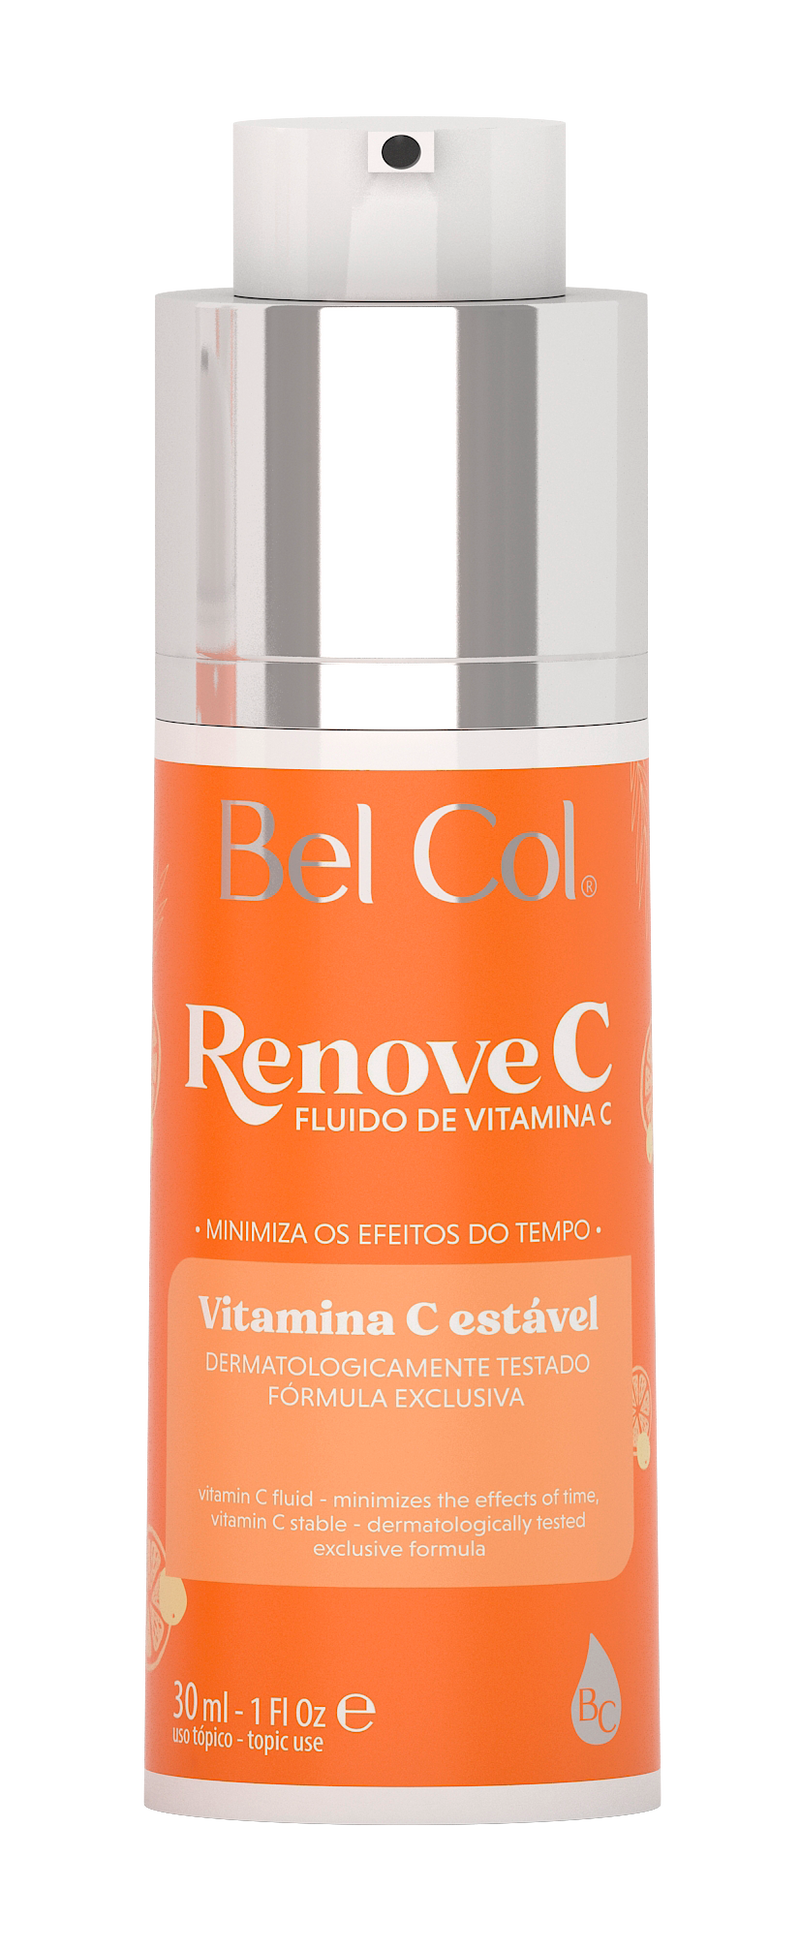 Renove C - fluido de vitamina C - 30ml